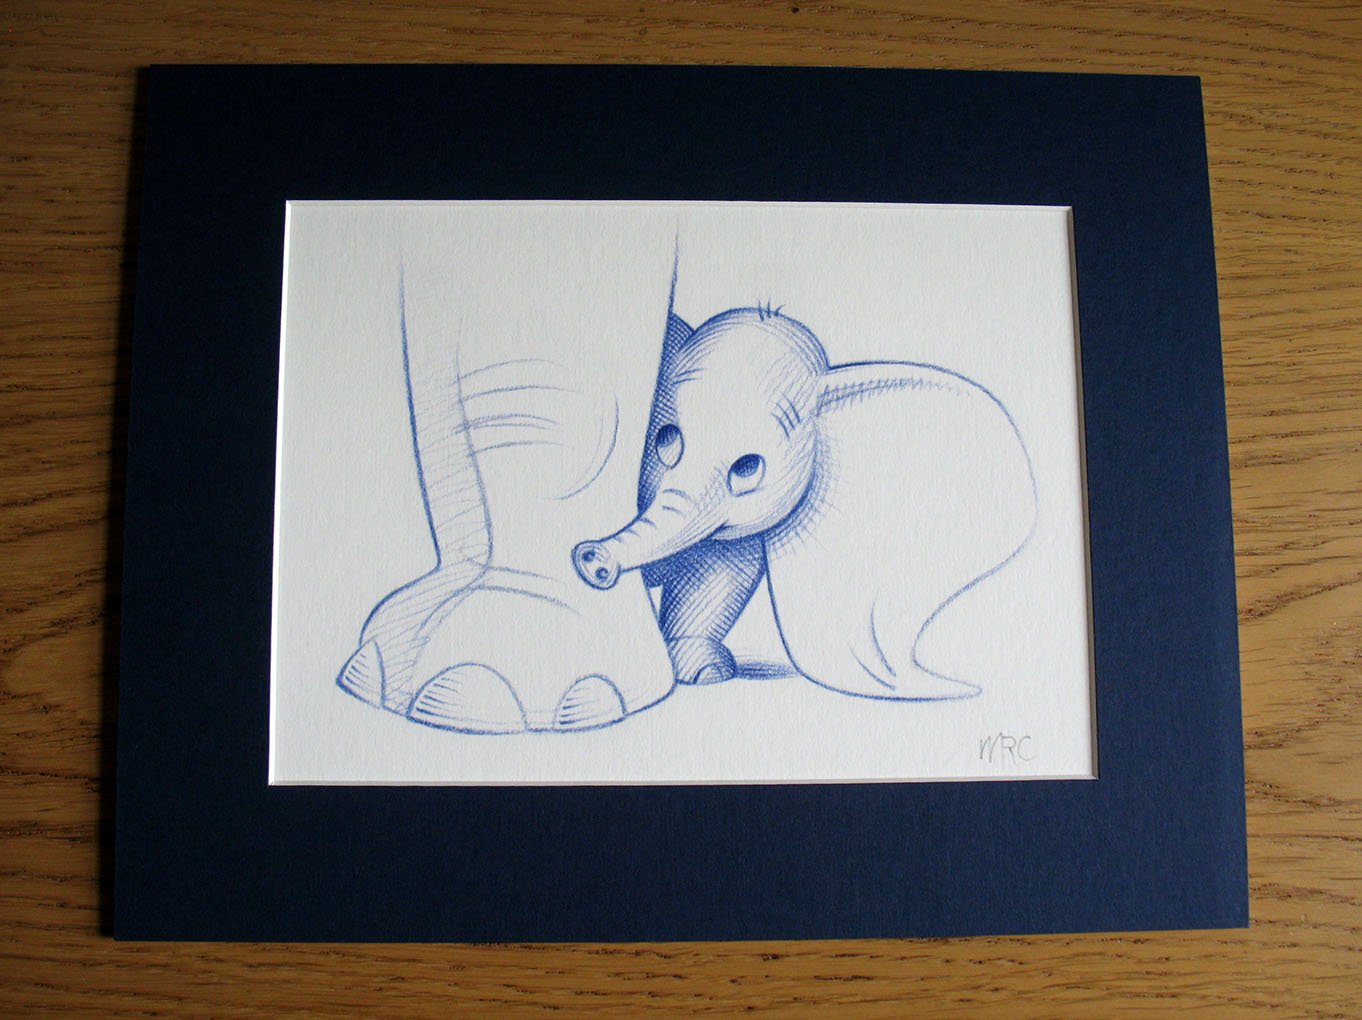 Classic Dumbo Disney style drawings - Golden Age inspired artwork - Art -  Prints